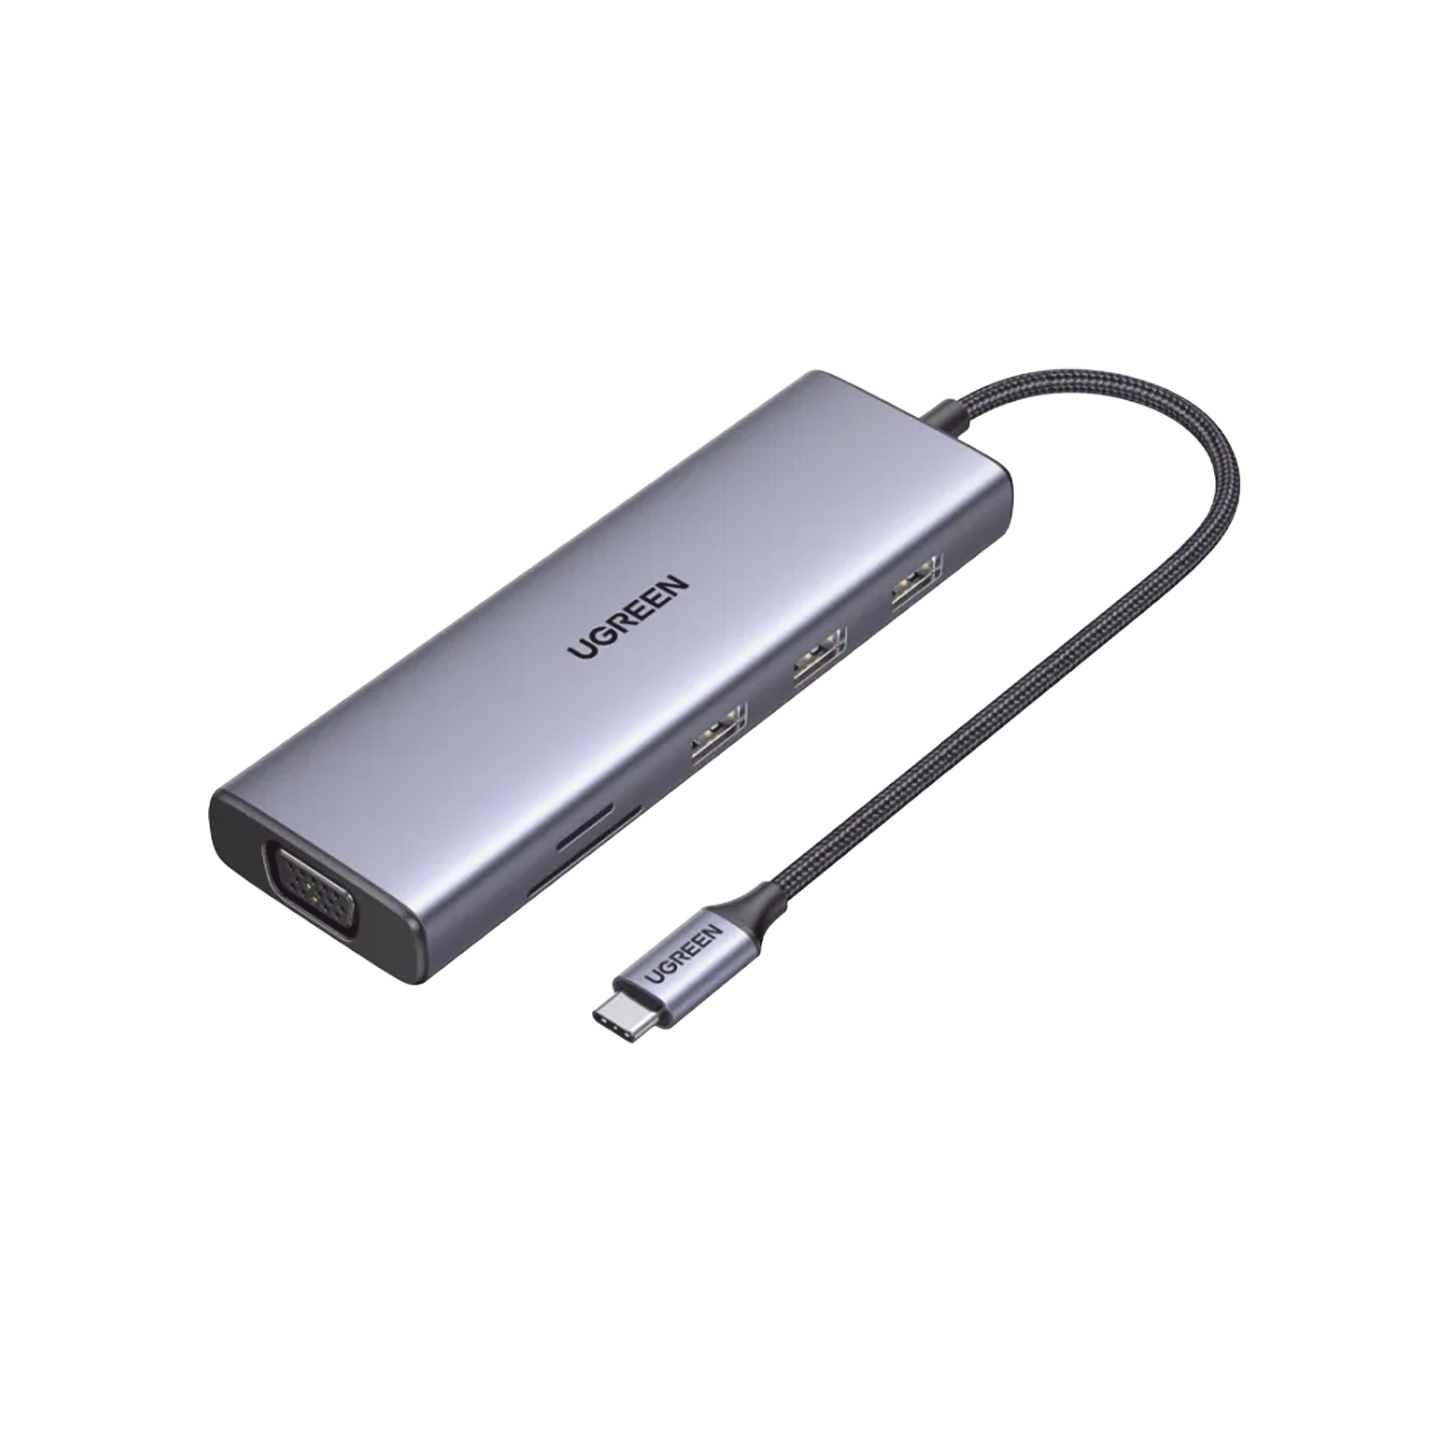 HUB USB-C (Docking Station) 9 en 1 | 3 USB-A 3.0 | USB-C PD Carga 100W | HDMI 4K@30Hz | RJ45 (Gigabit Ethernet) | VGA | Lector Tarjetas SD + Micro SD (TF) Uso Simultáneo | Chip de Última Generación | Caja de Aluminio.